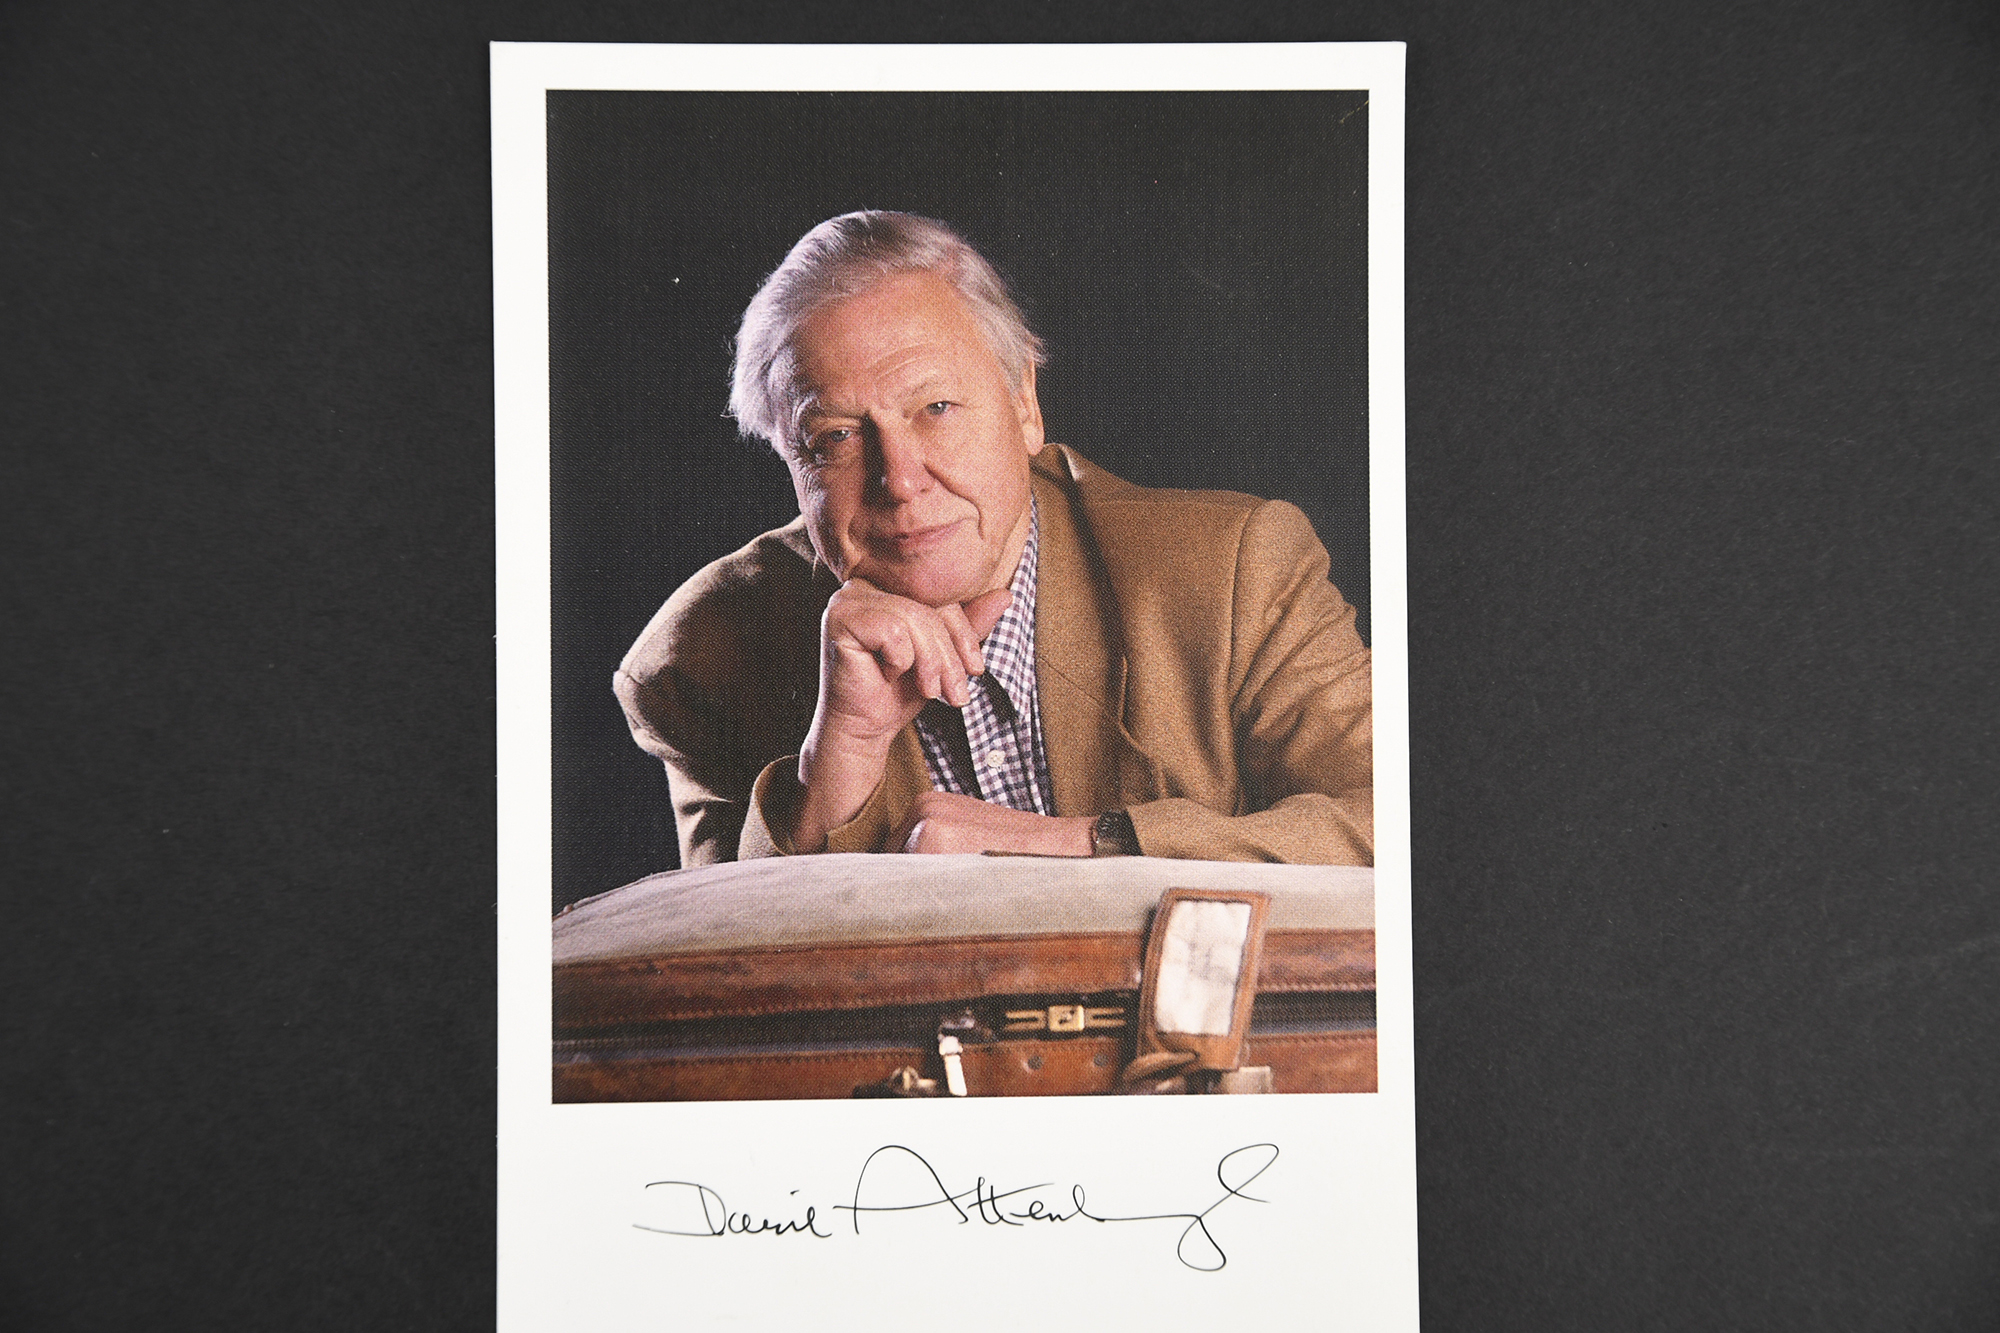 David Attenborough (1926 - ) Original Signature on photograph